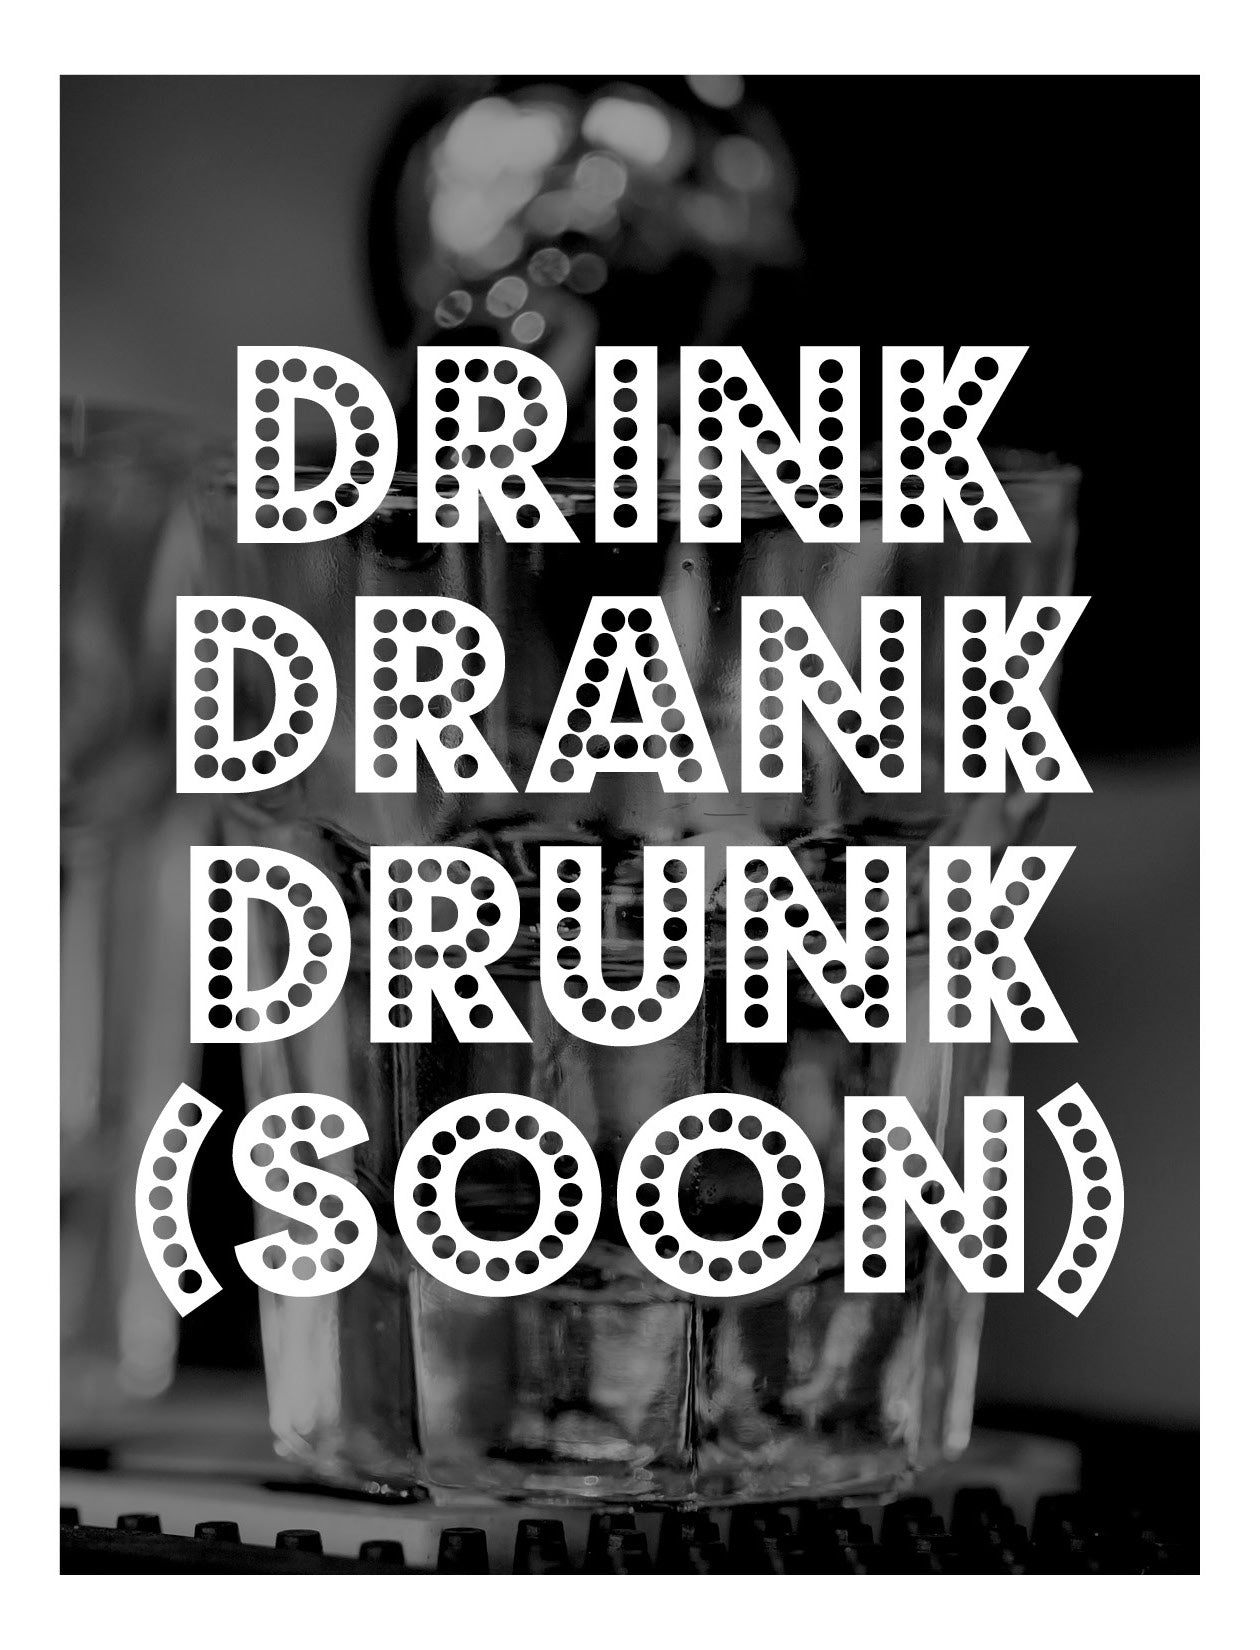 The Drink Drank Drunk Soon Card